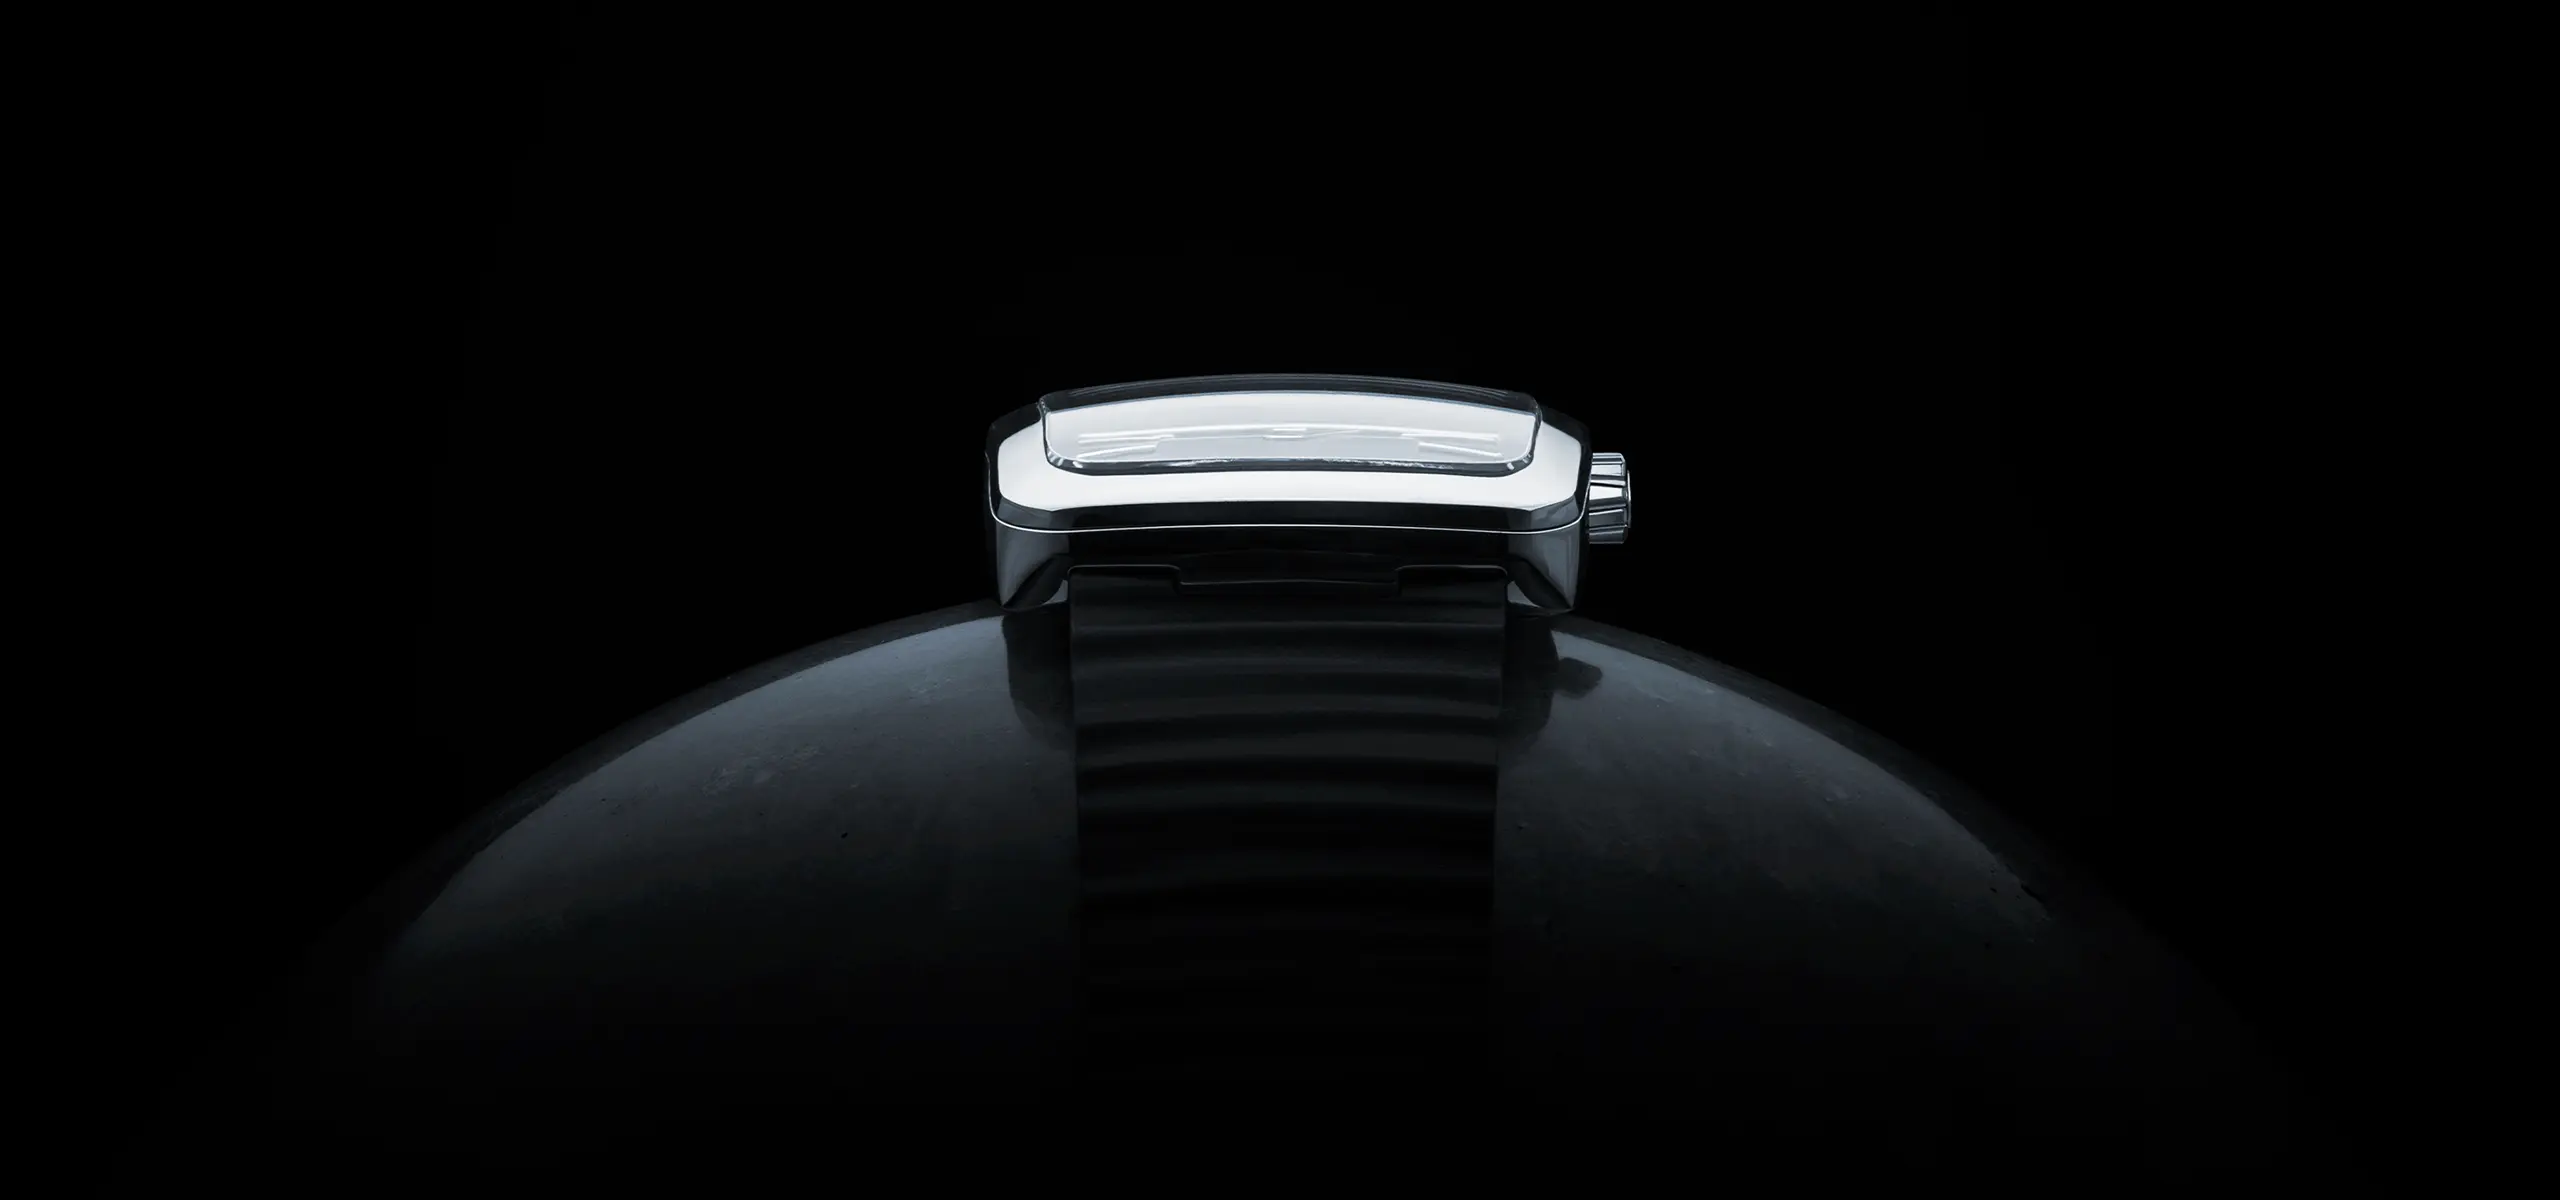 generative watch design for kromm by Groen & Boothman